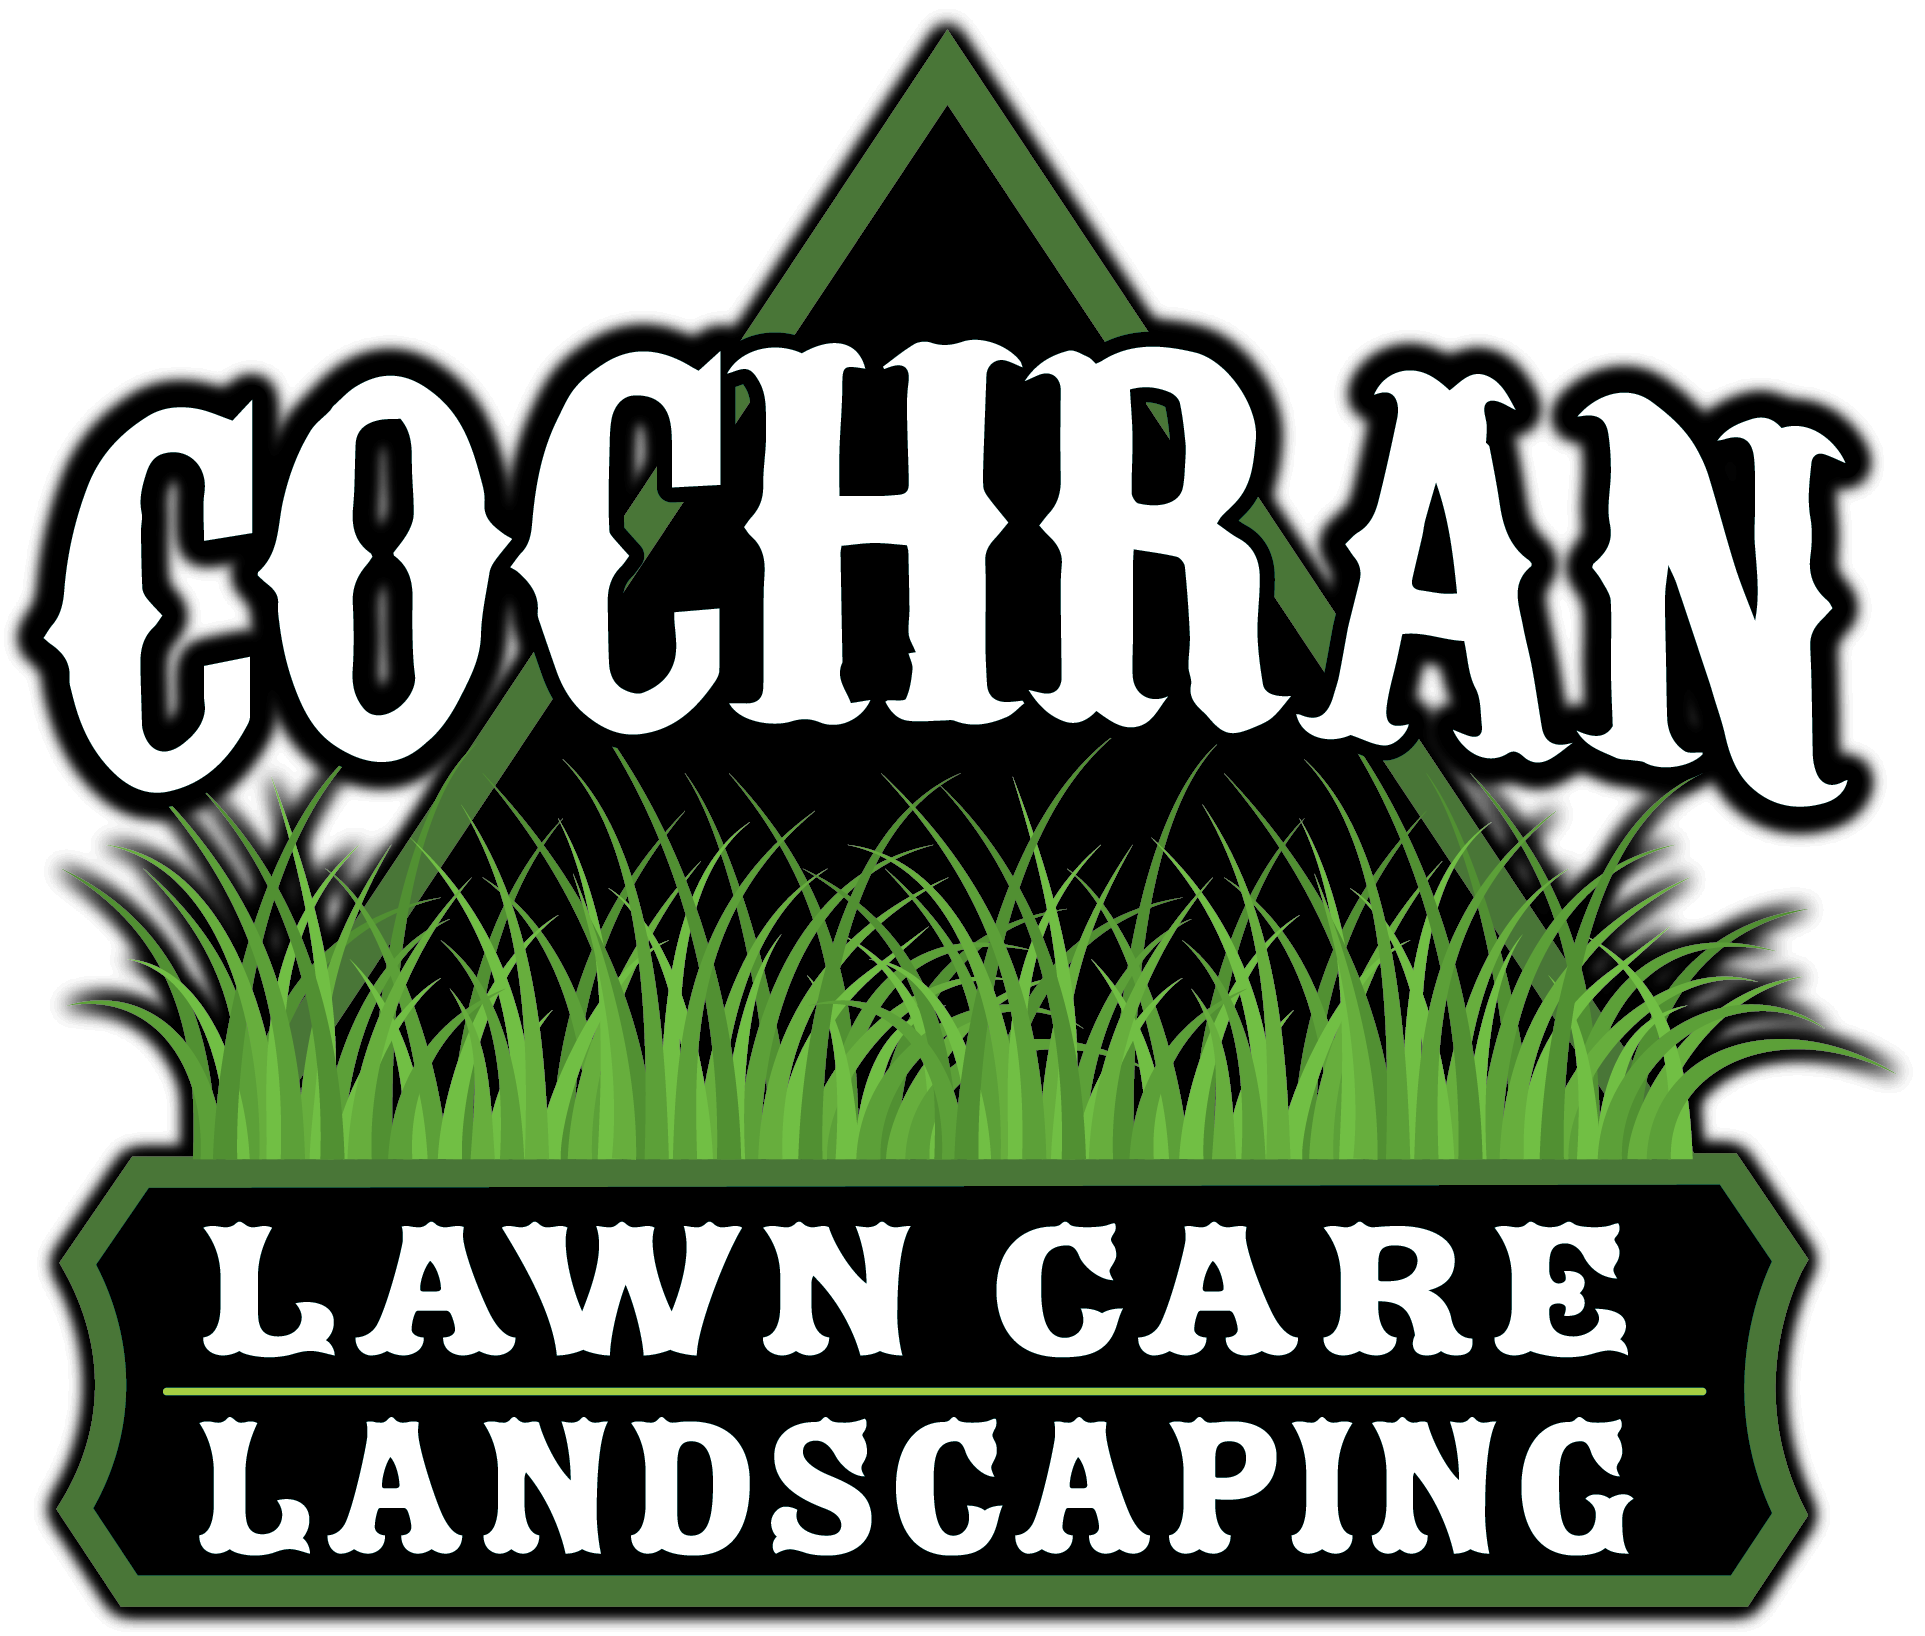 Cochran Lawn Care & Landscaping